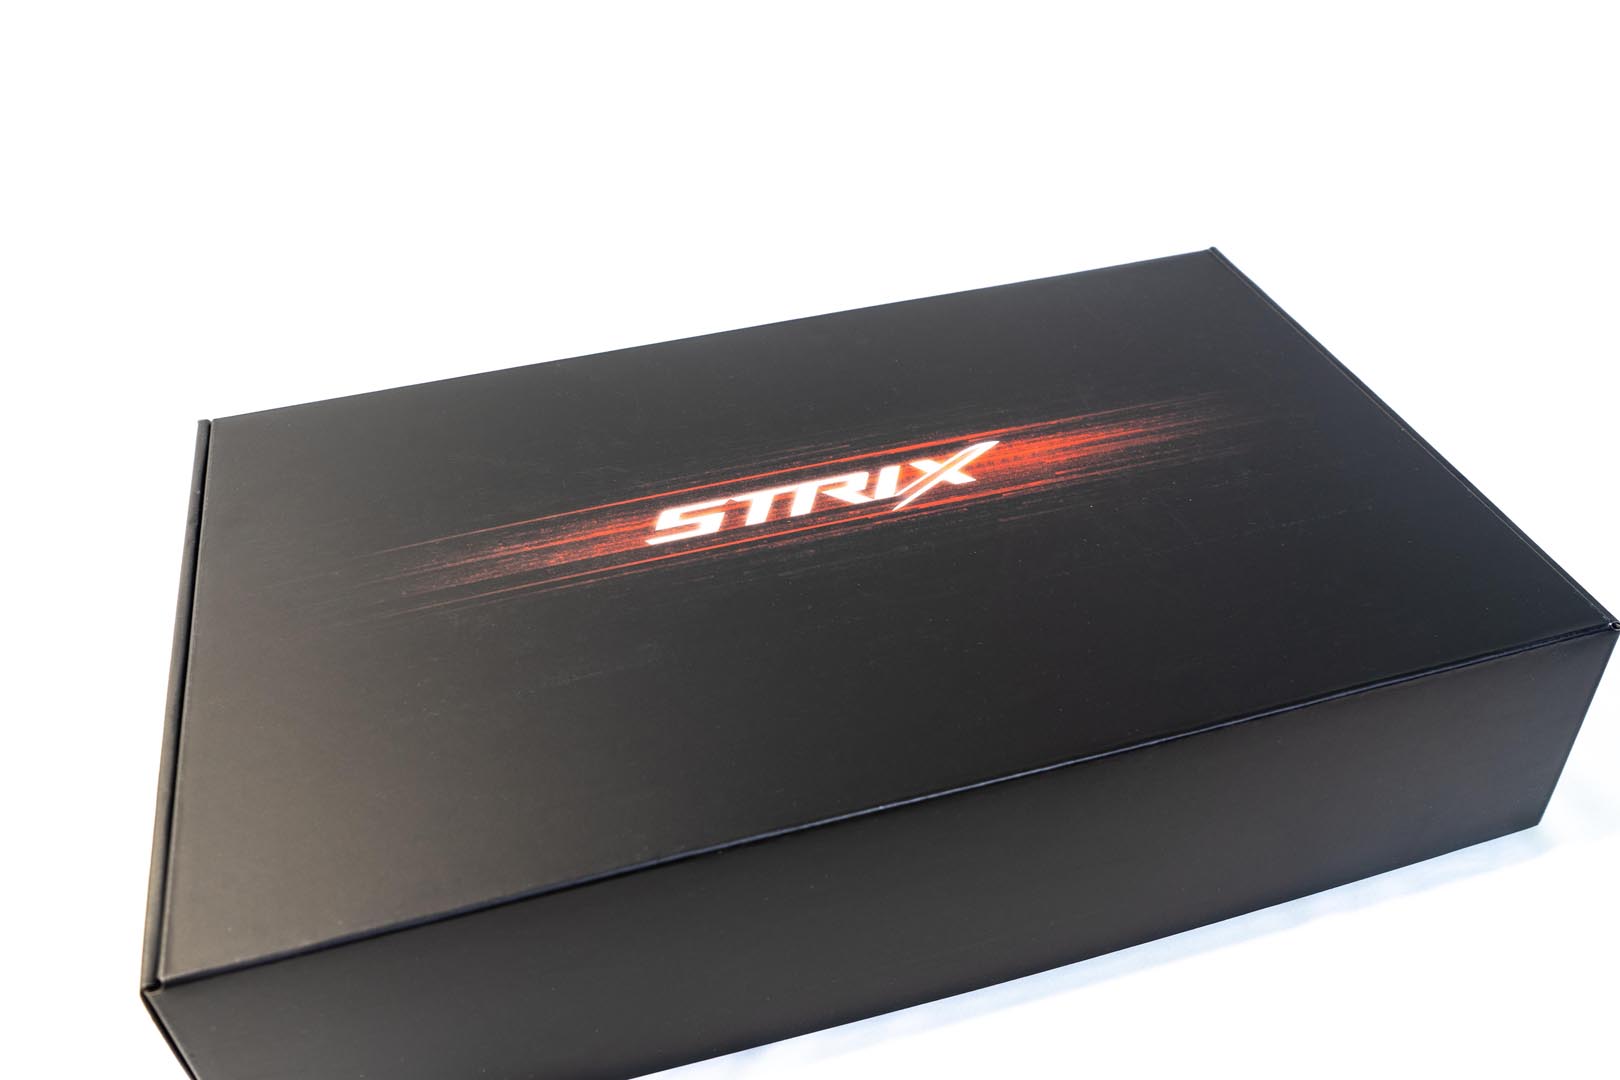 MAXIMISE THE ROG POWER! ASUS ROG STRIX RTX 2080TI O11G REVIEW | EPIC PC